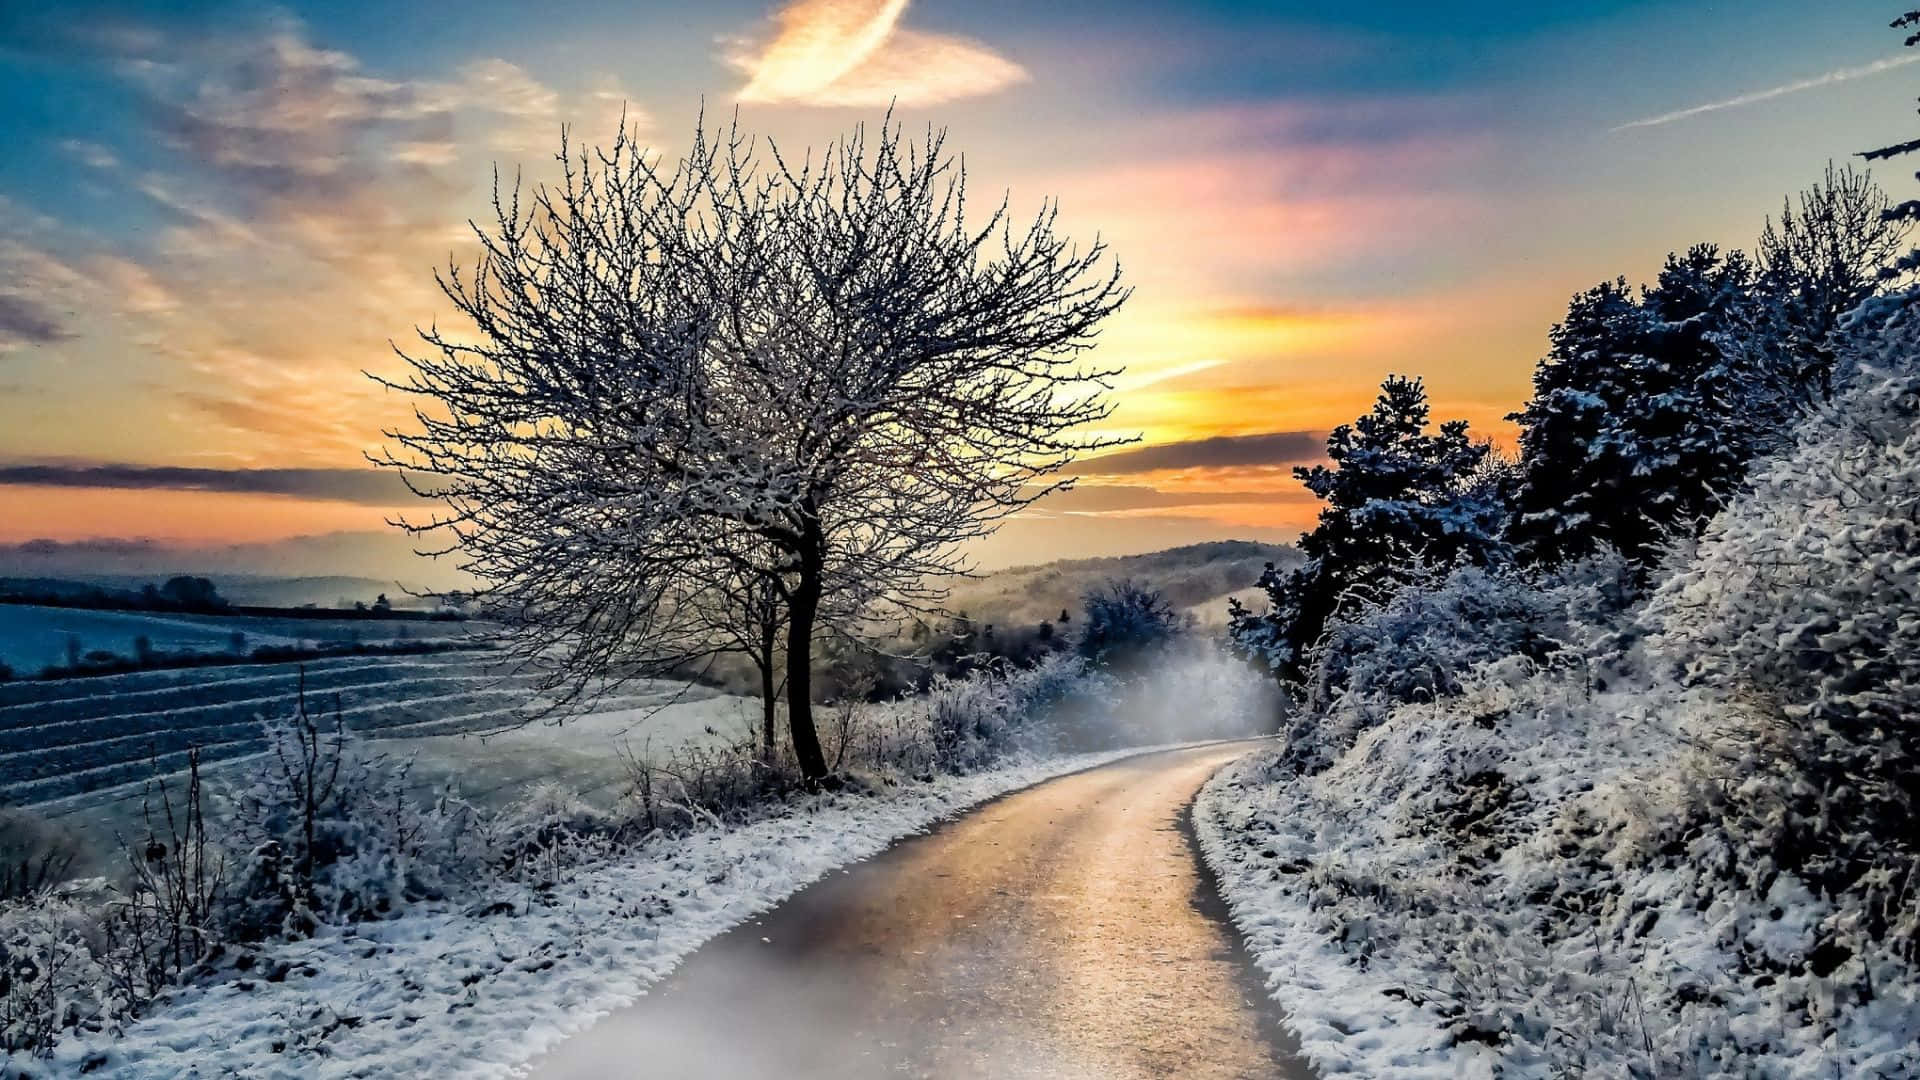 Majestic Winter Sun Over Snow-Covered Landscape Wallpaper